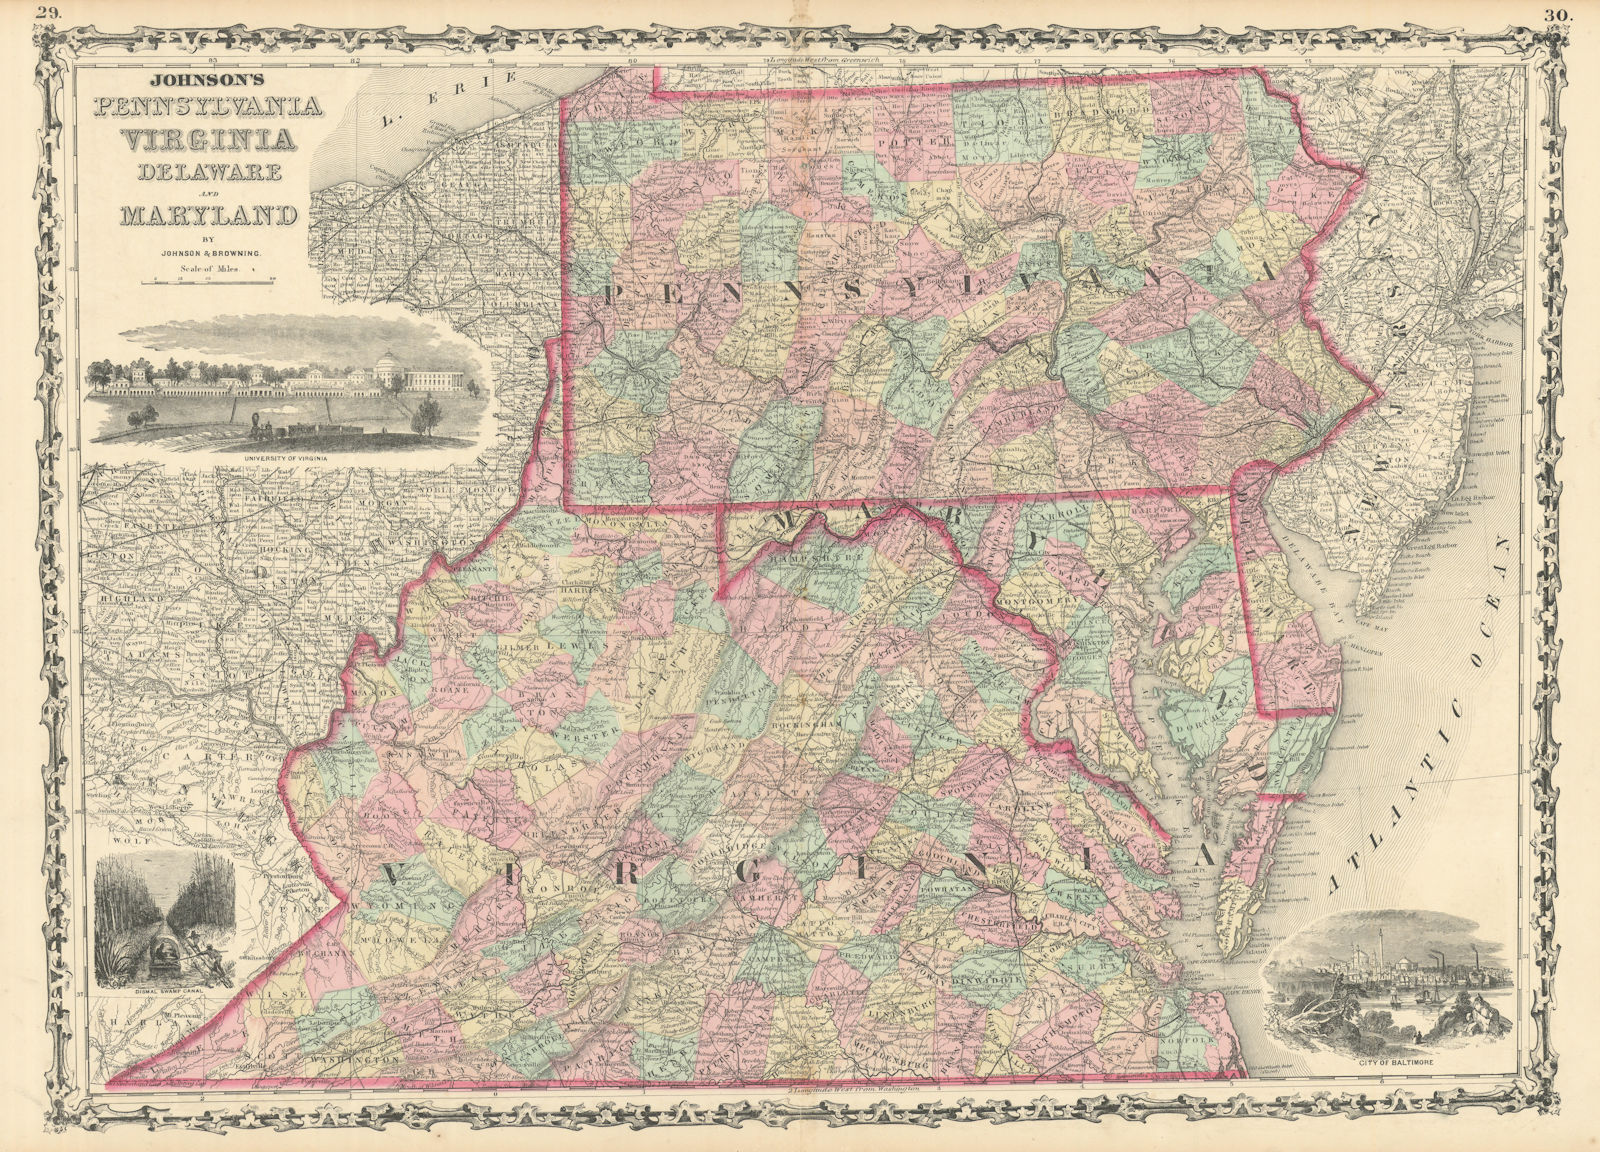 Associate Product Johnson's Pennsylvania, Virginia, Delaware & Maryland. US state map 1861